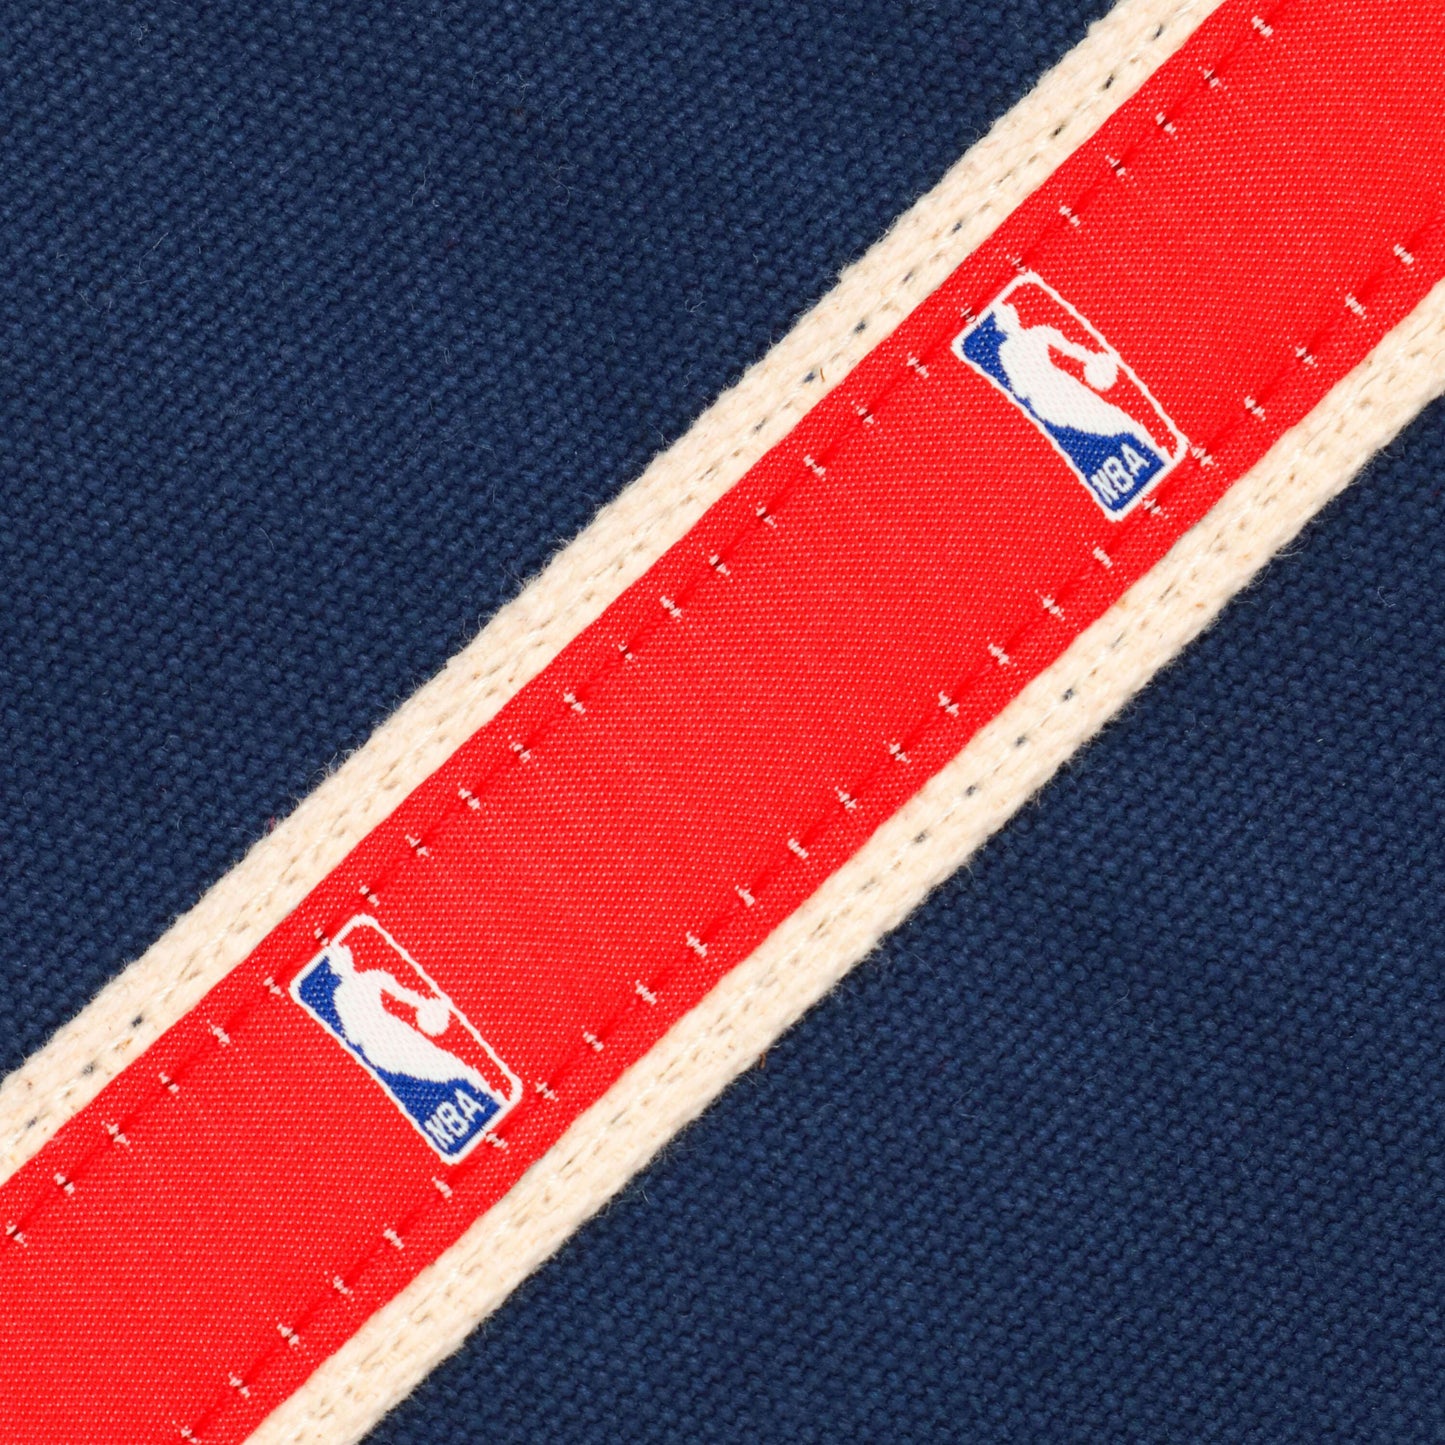 Rowing Blazers x NBA Logo Banker Bag